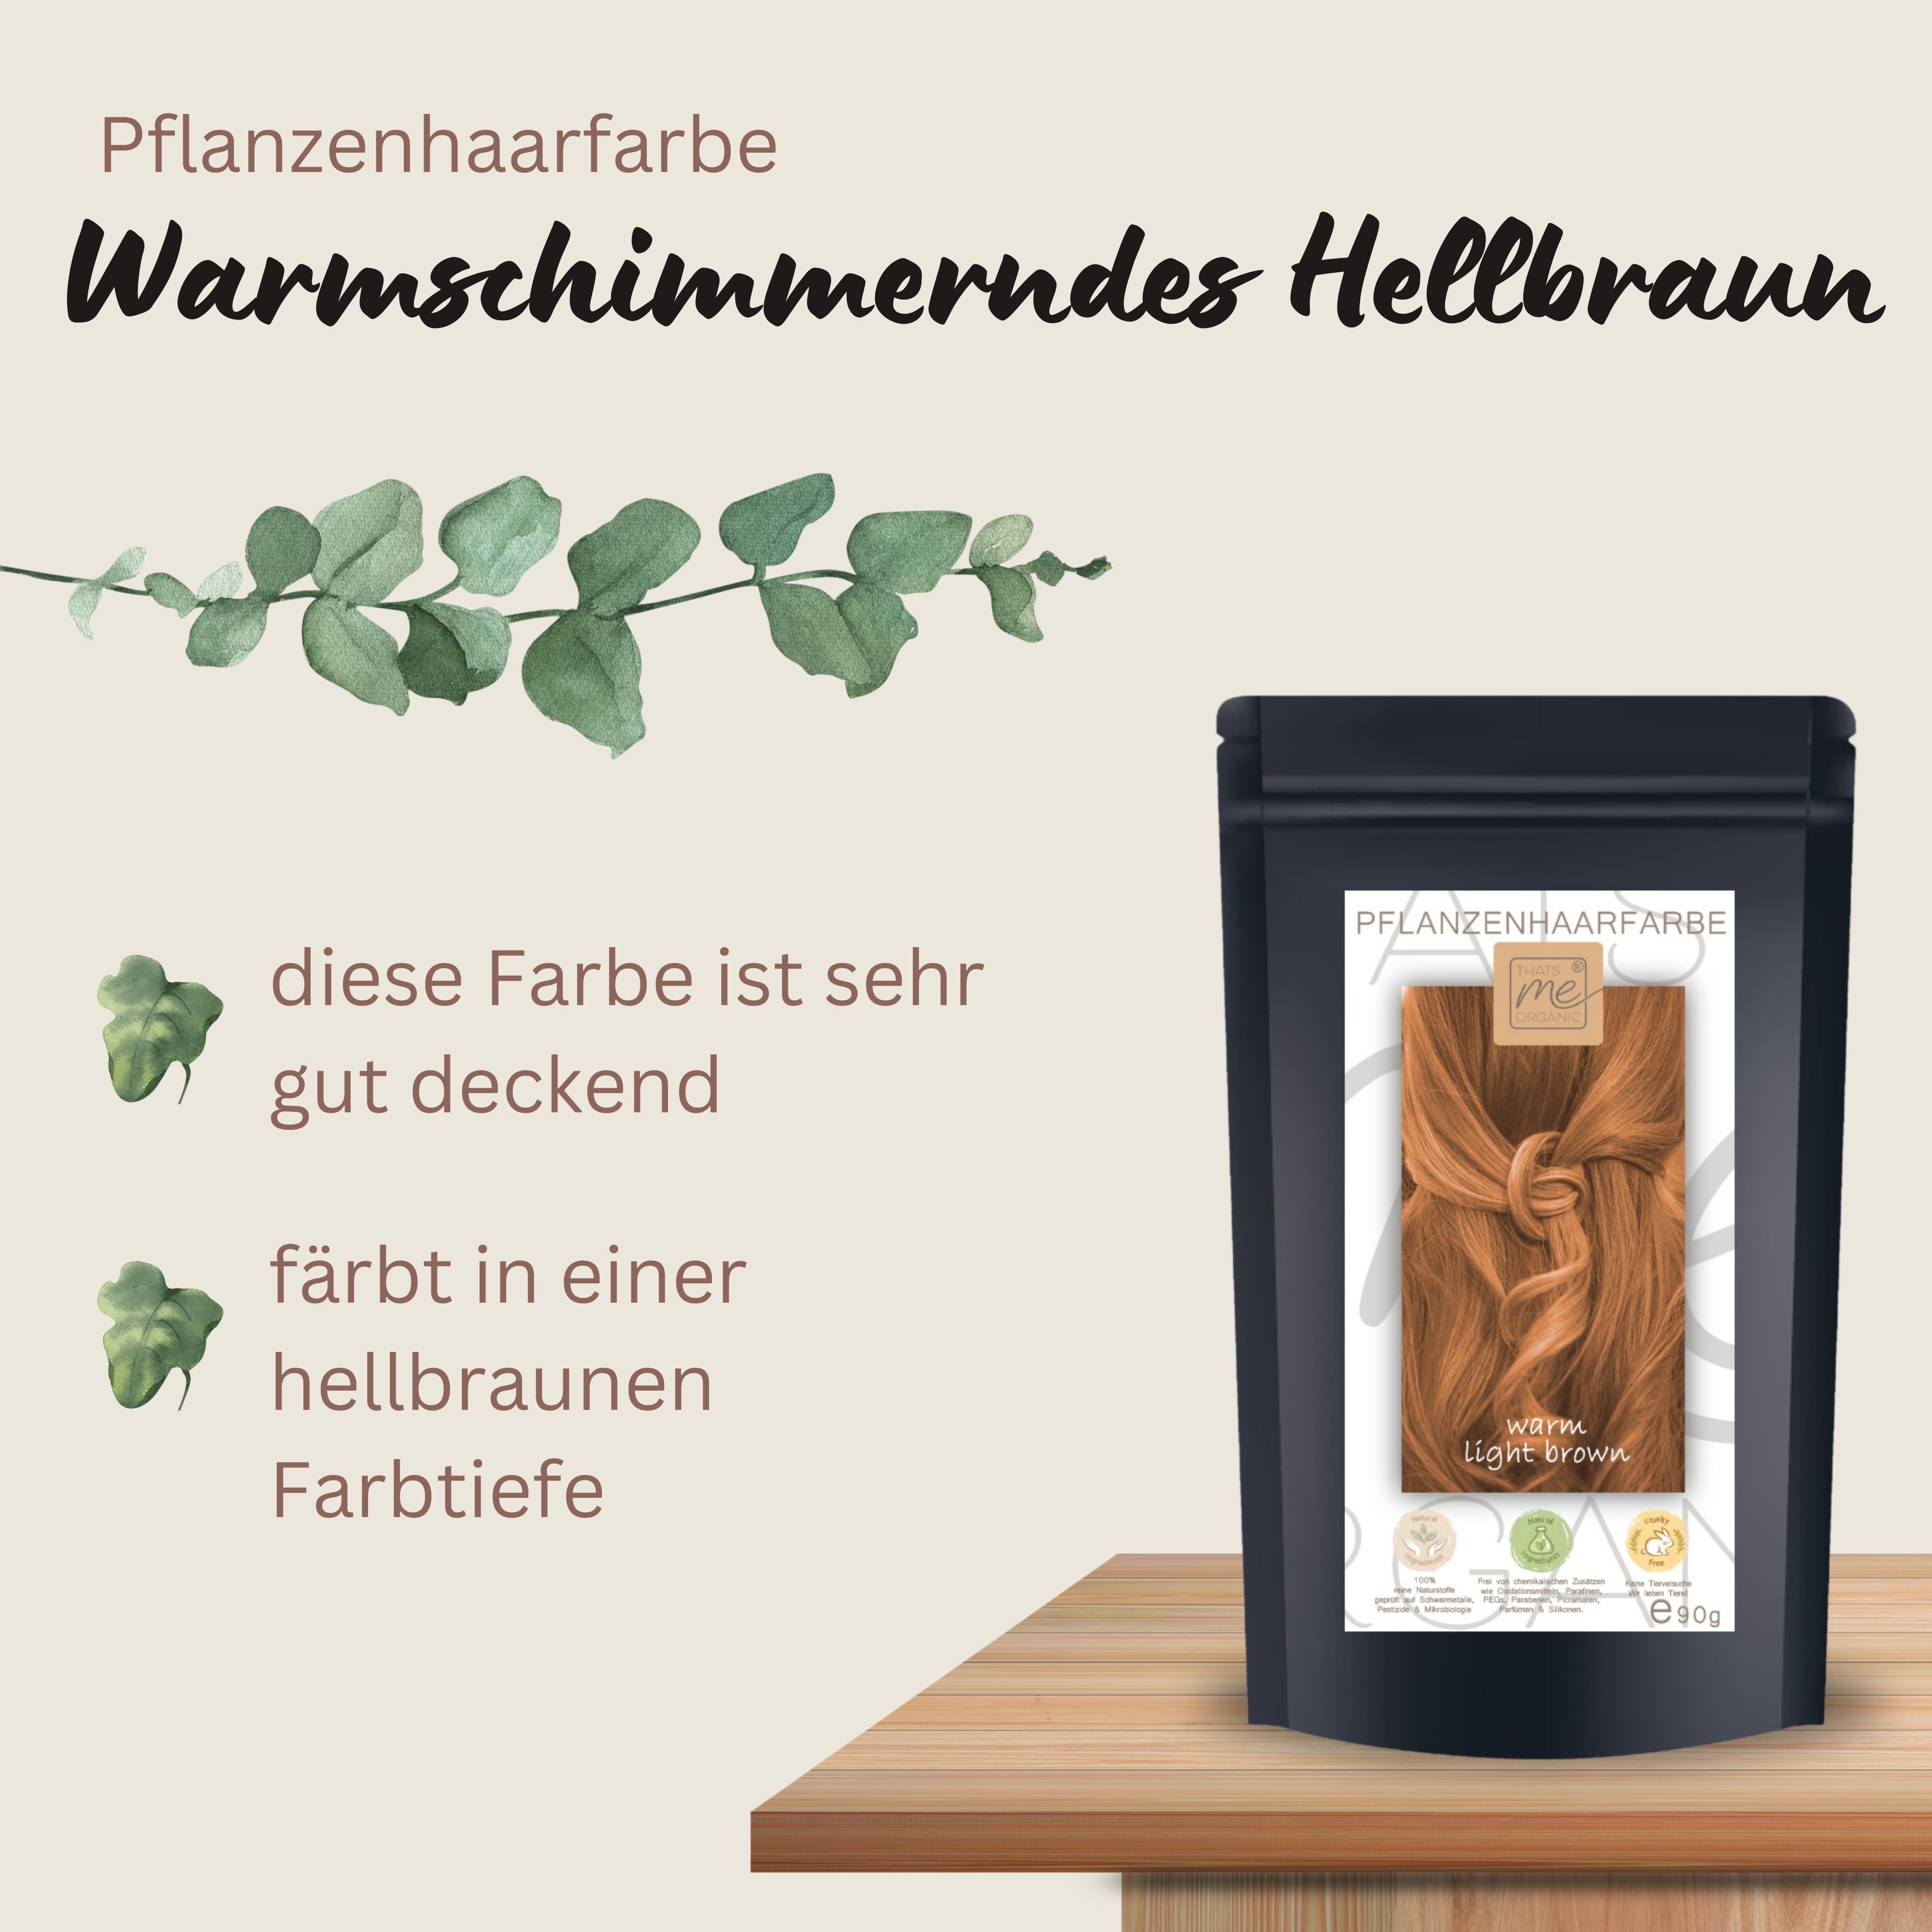 Profi-Pflanzenhaarfarbe warmes Hell-Braun "warm light brown" 90g Nachfüllpack